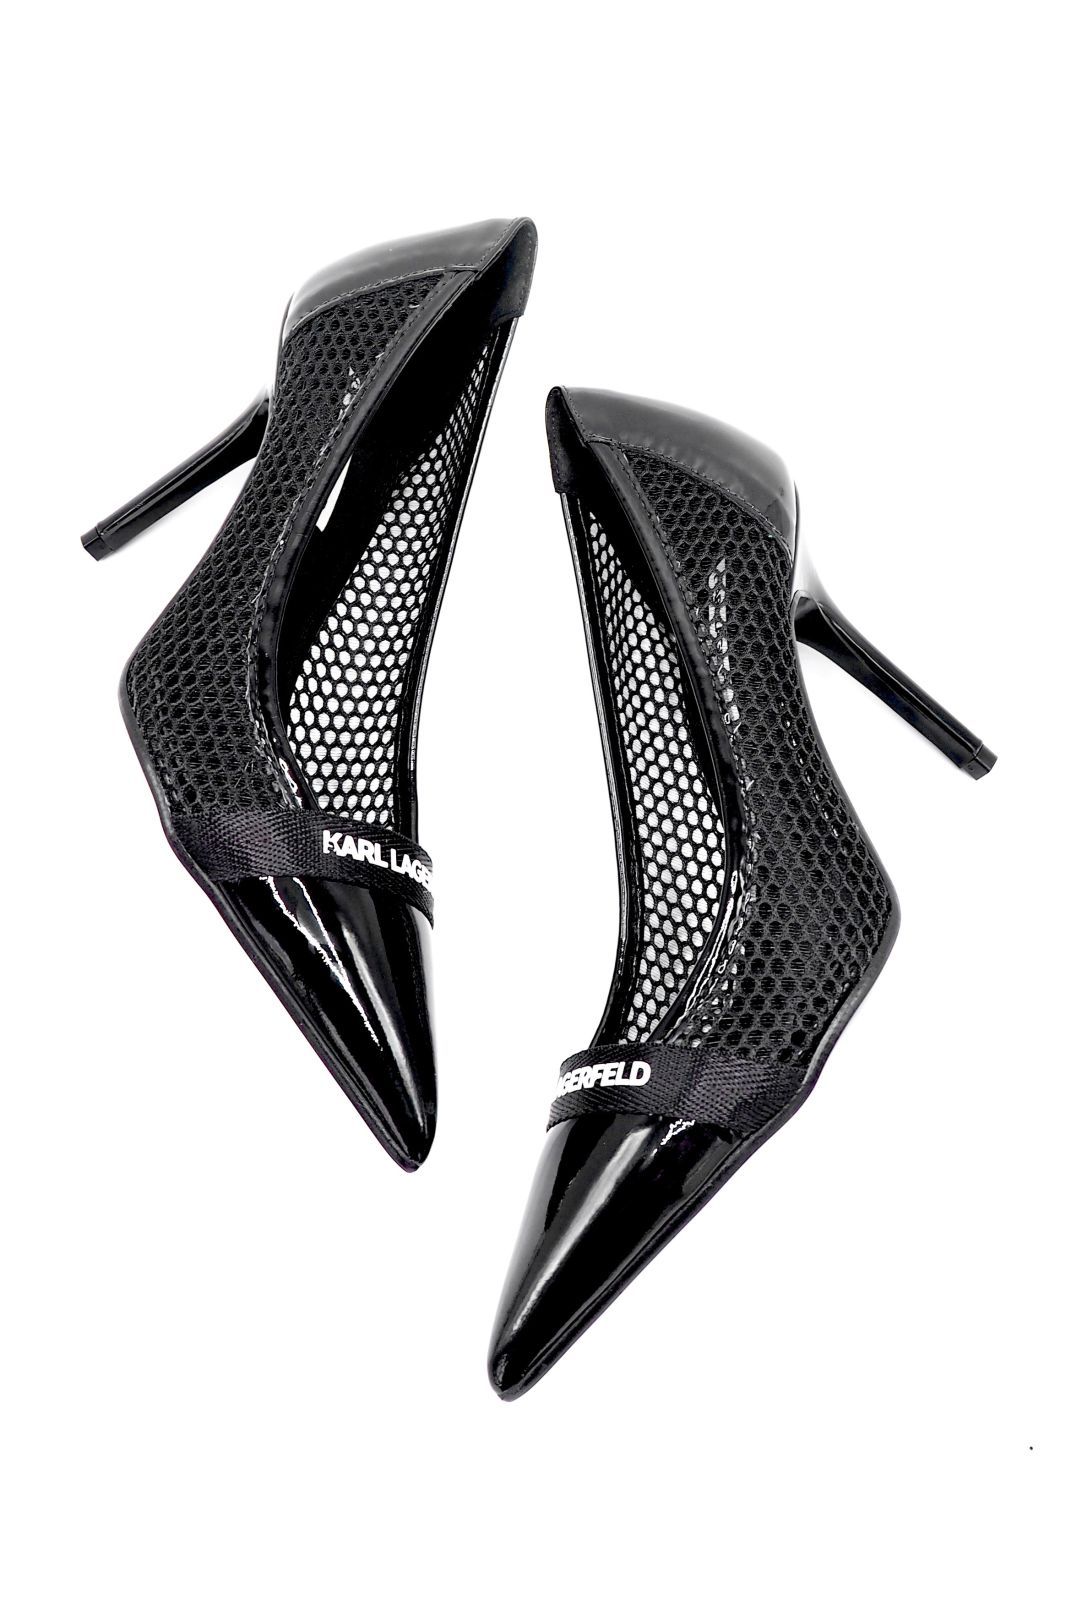 Karl Lagerfeld escarpin Noir femmes (KL-Epin TH - MANOIR Epin noir + filet) - Marine | Much more than shoes